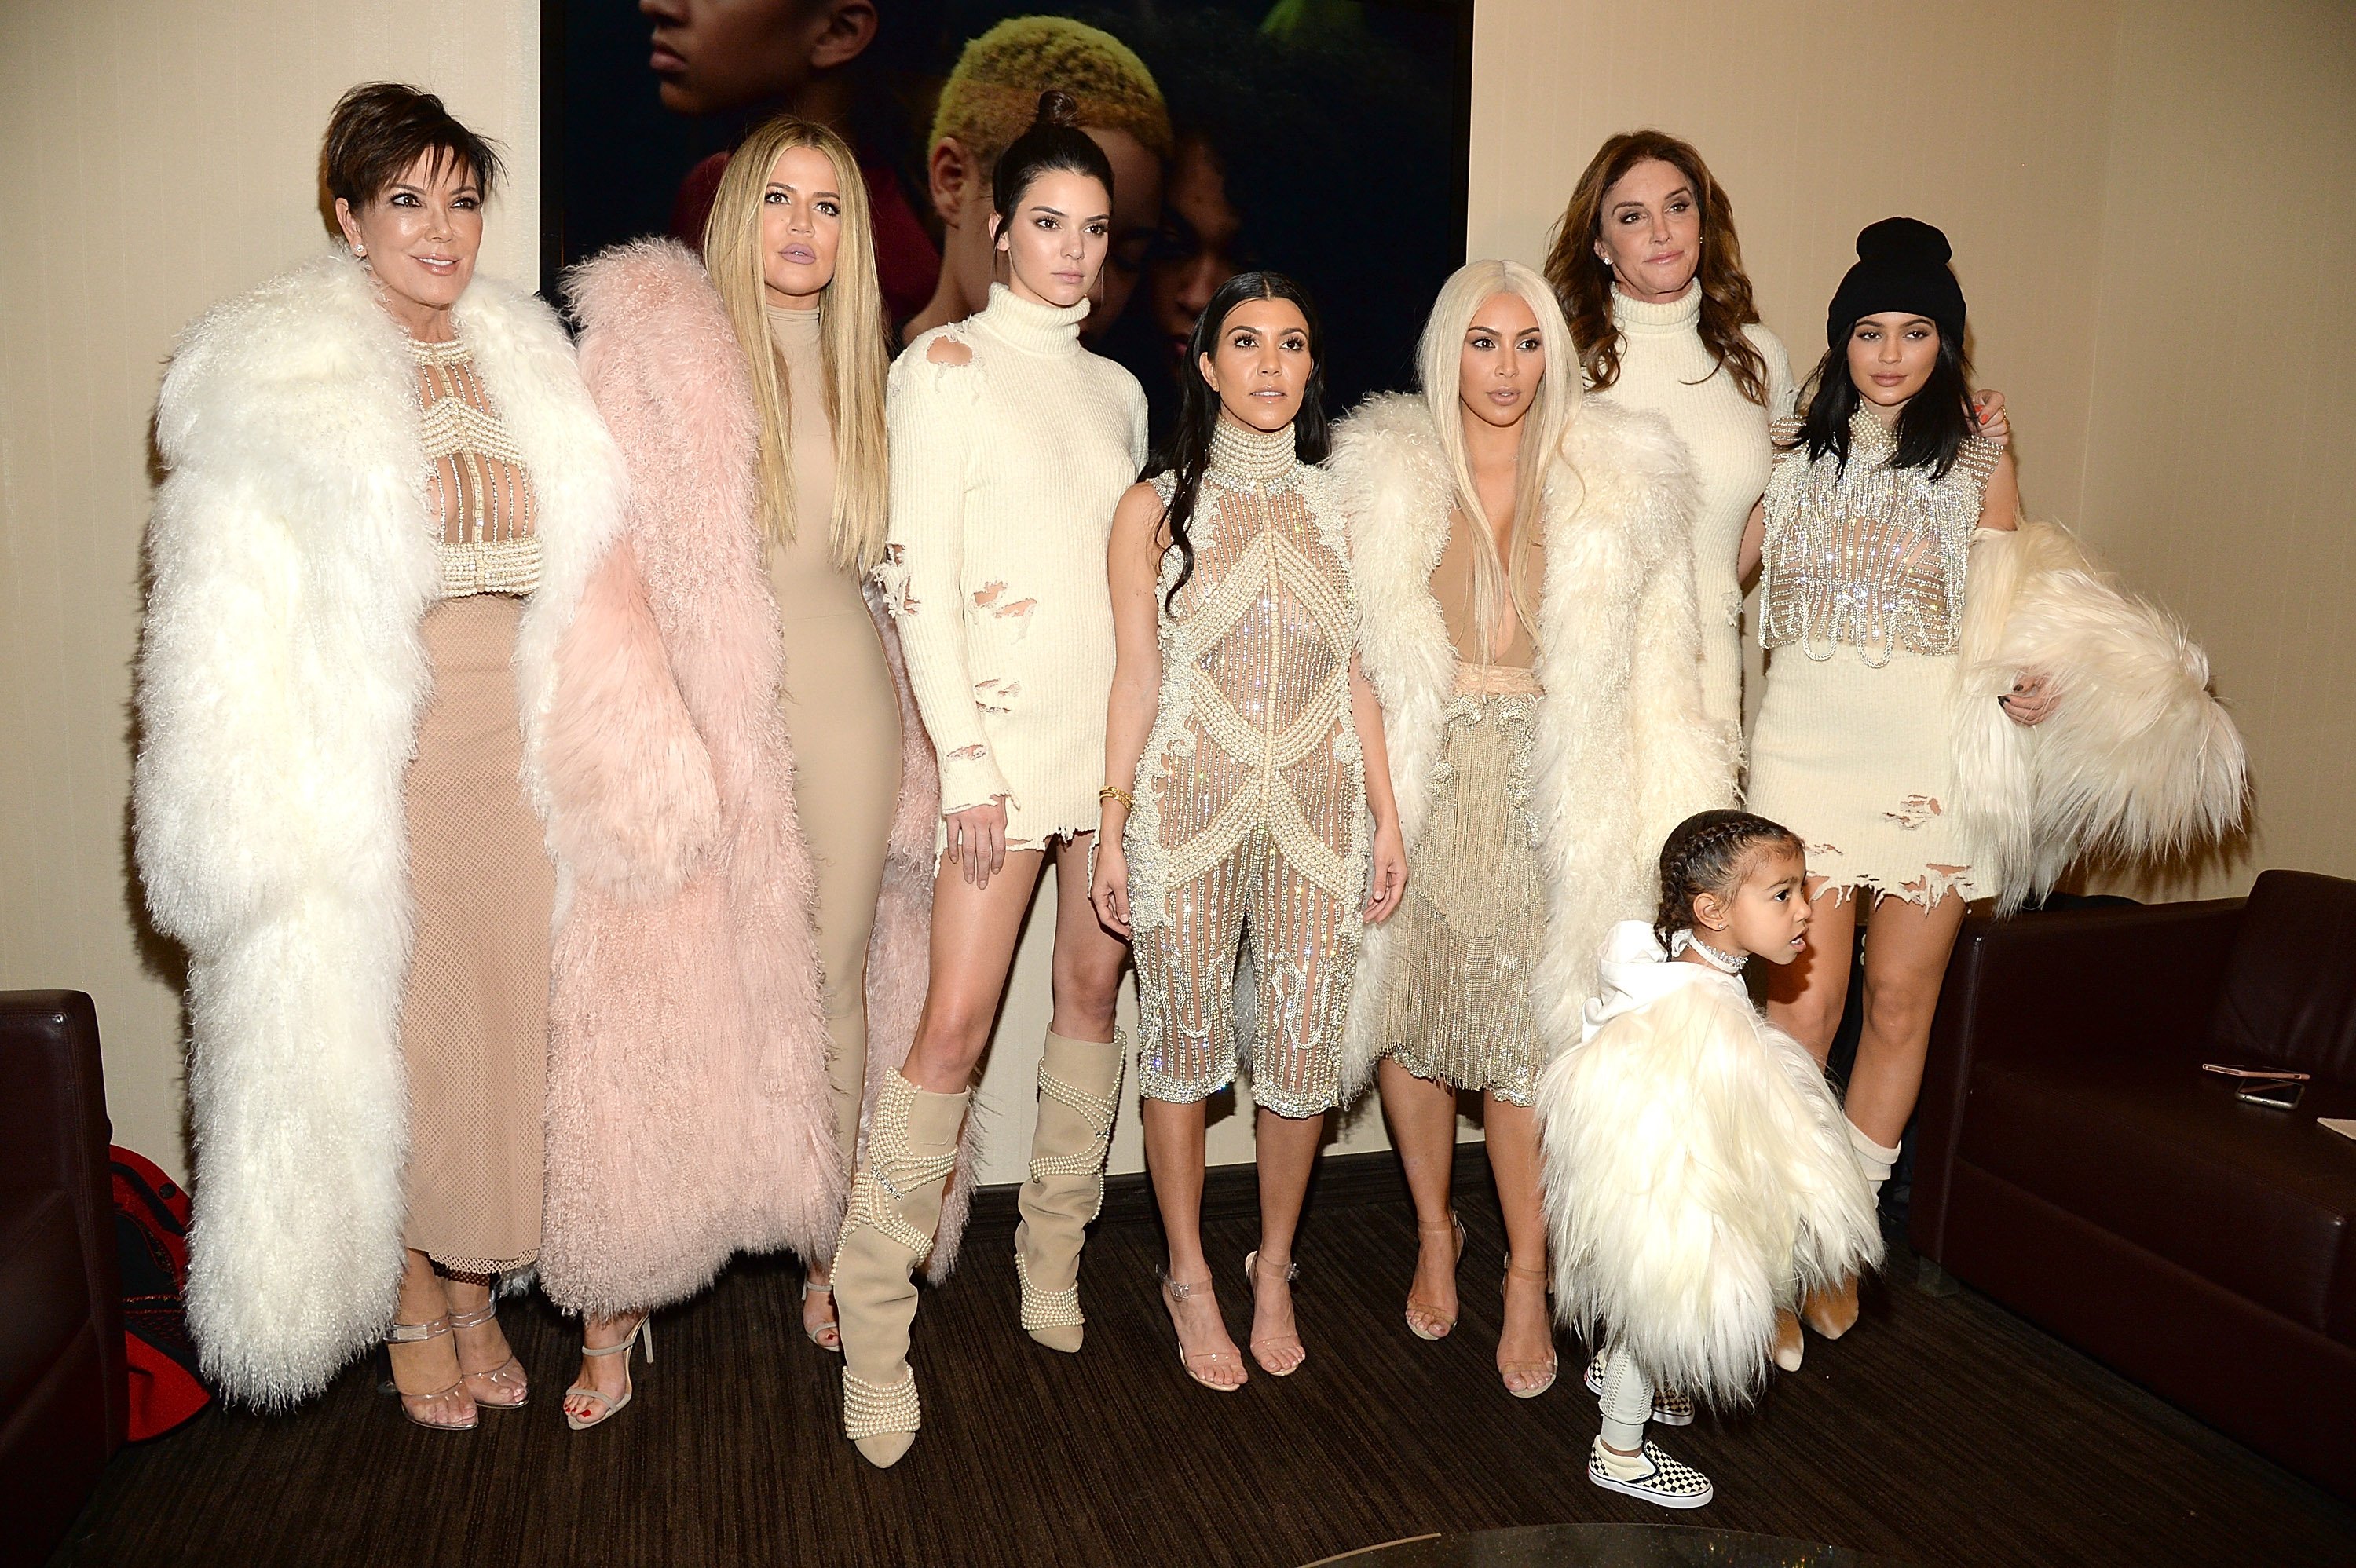 Khloe Kardashian, Kris Jenner, Kendall Jenner, Kourtney Kardashian, Kim Kardashian West, North West, Caitlyn Jenner and Kylie Jenner attend Kanye West "Yeezy" Season 3 on February 11, 2016, in New York City | Photo: Getty Images.